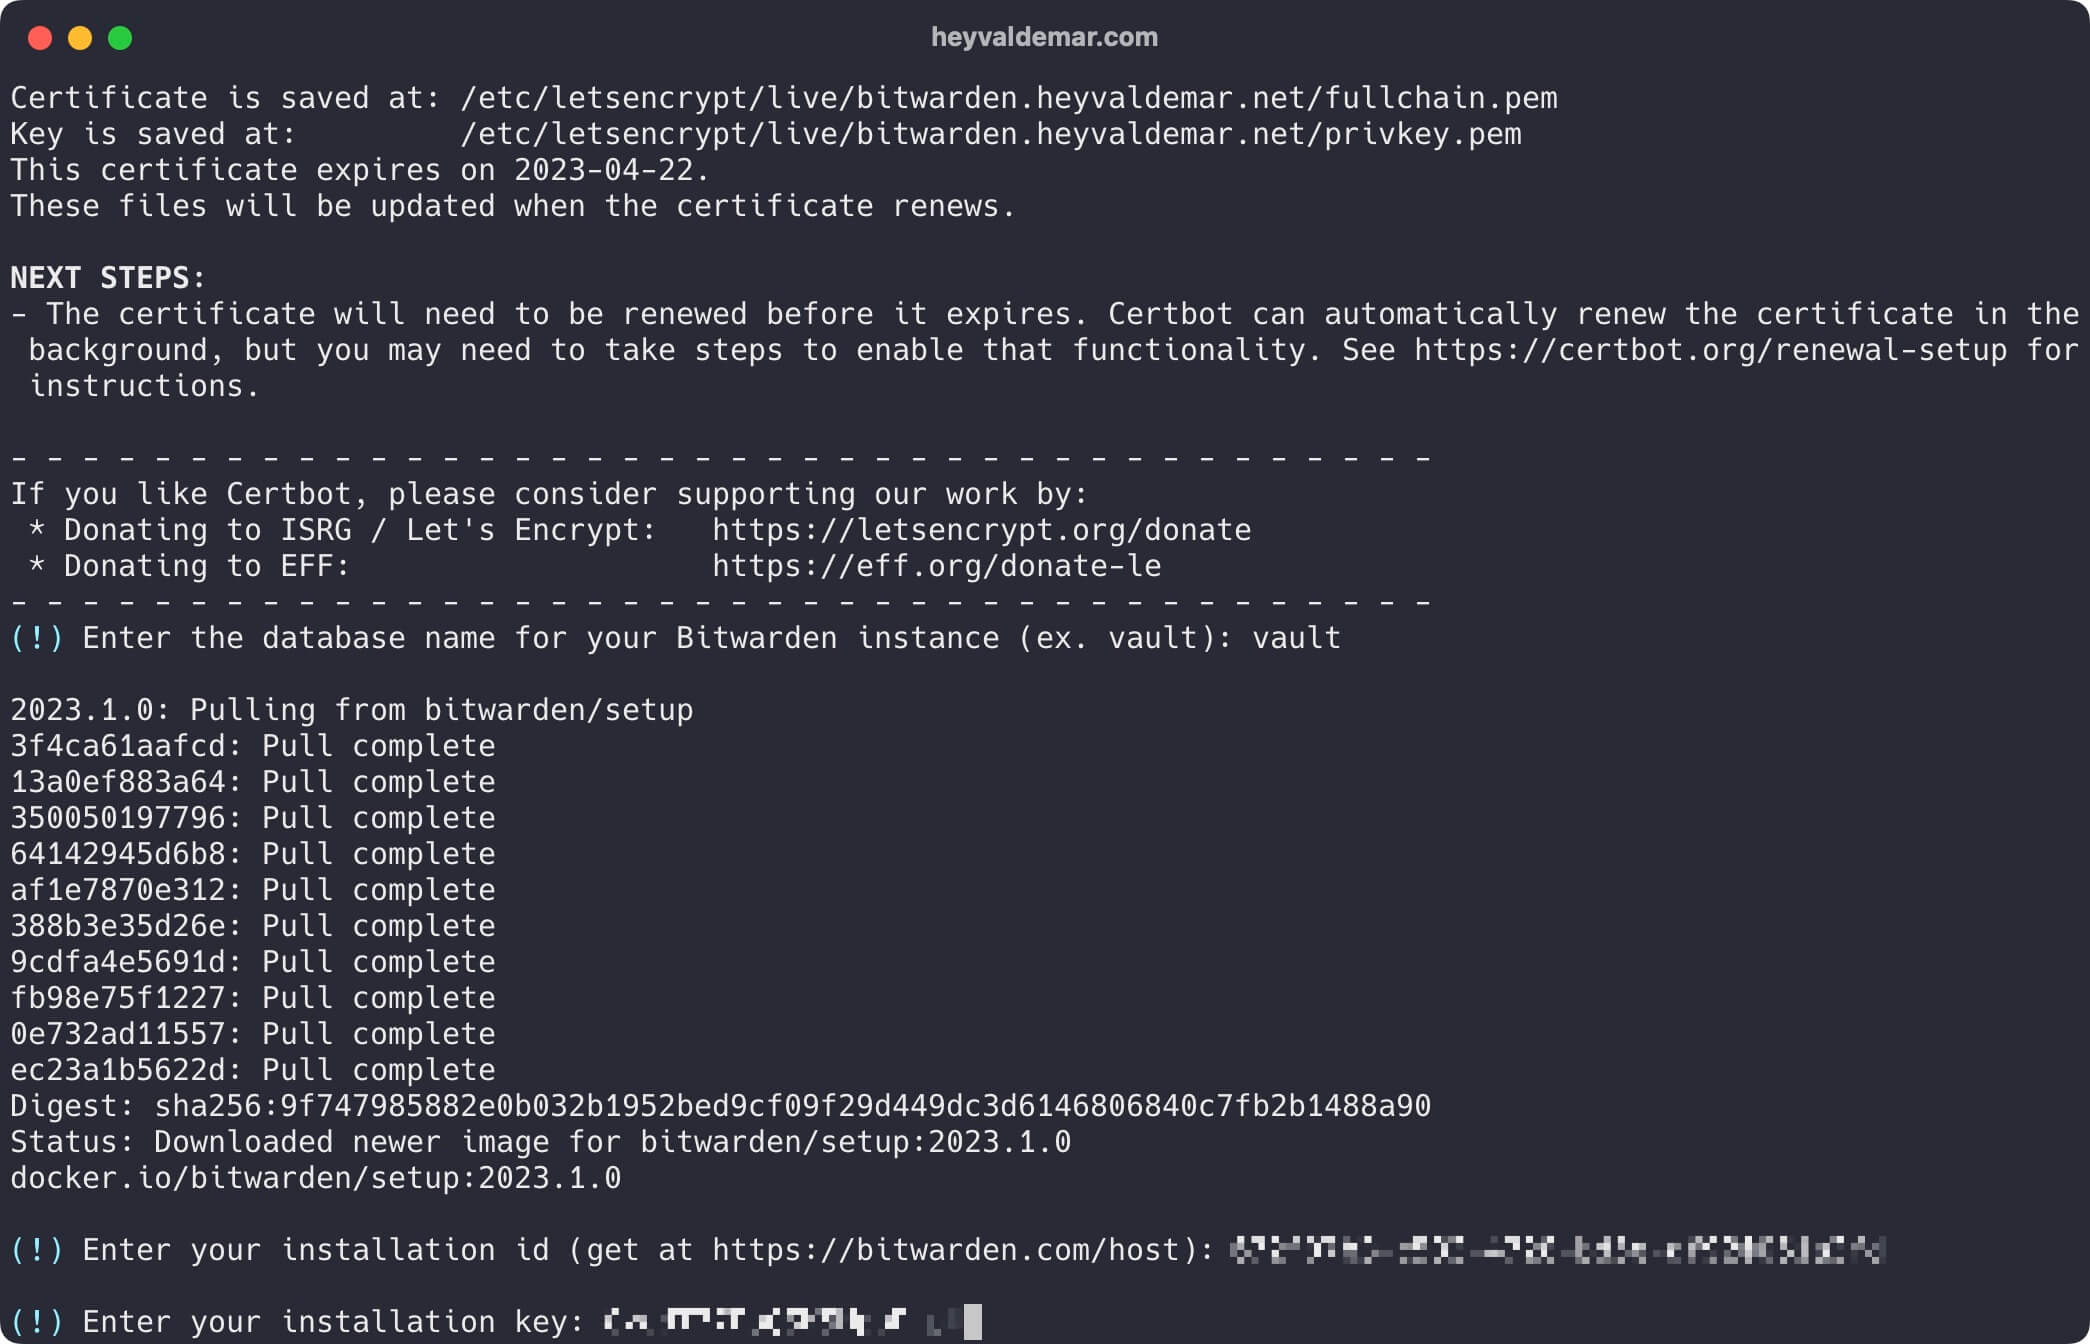 Install Bitwarden on Ubuntu Server 22.04 LTS